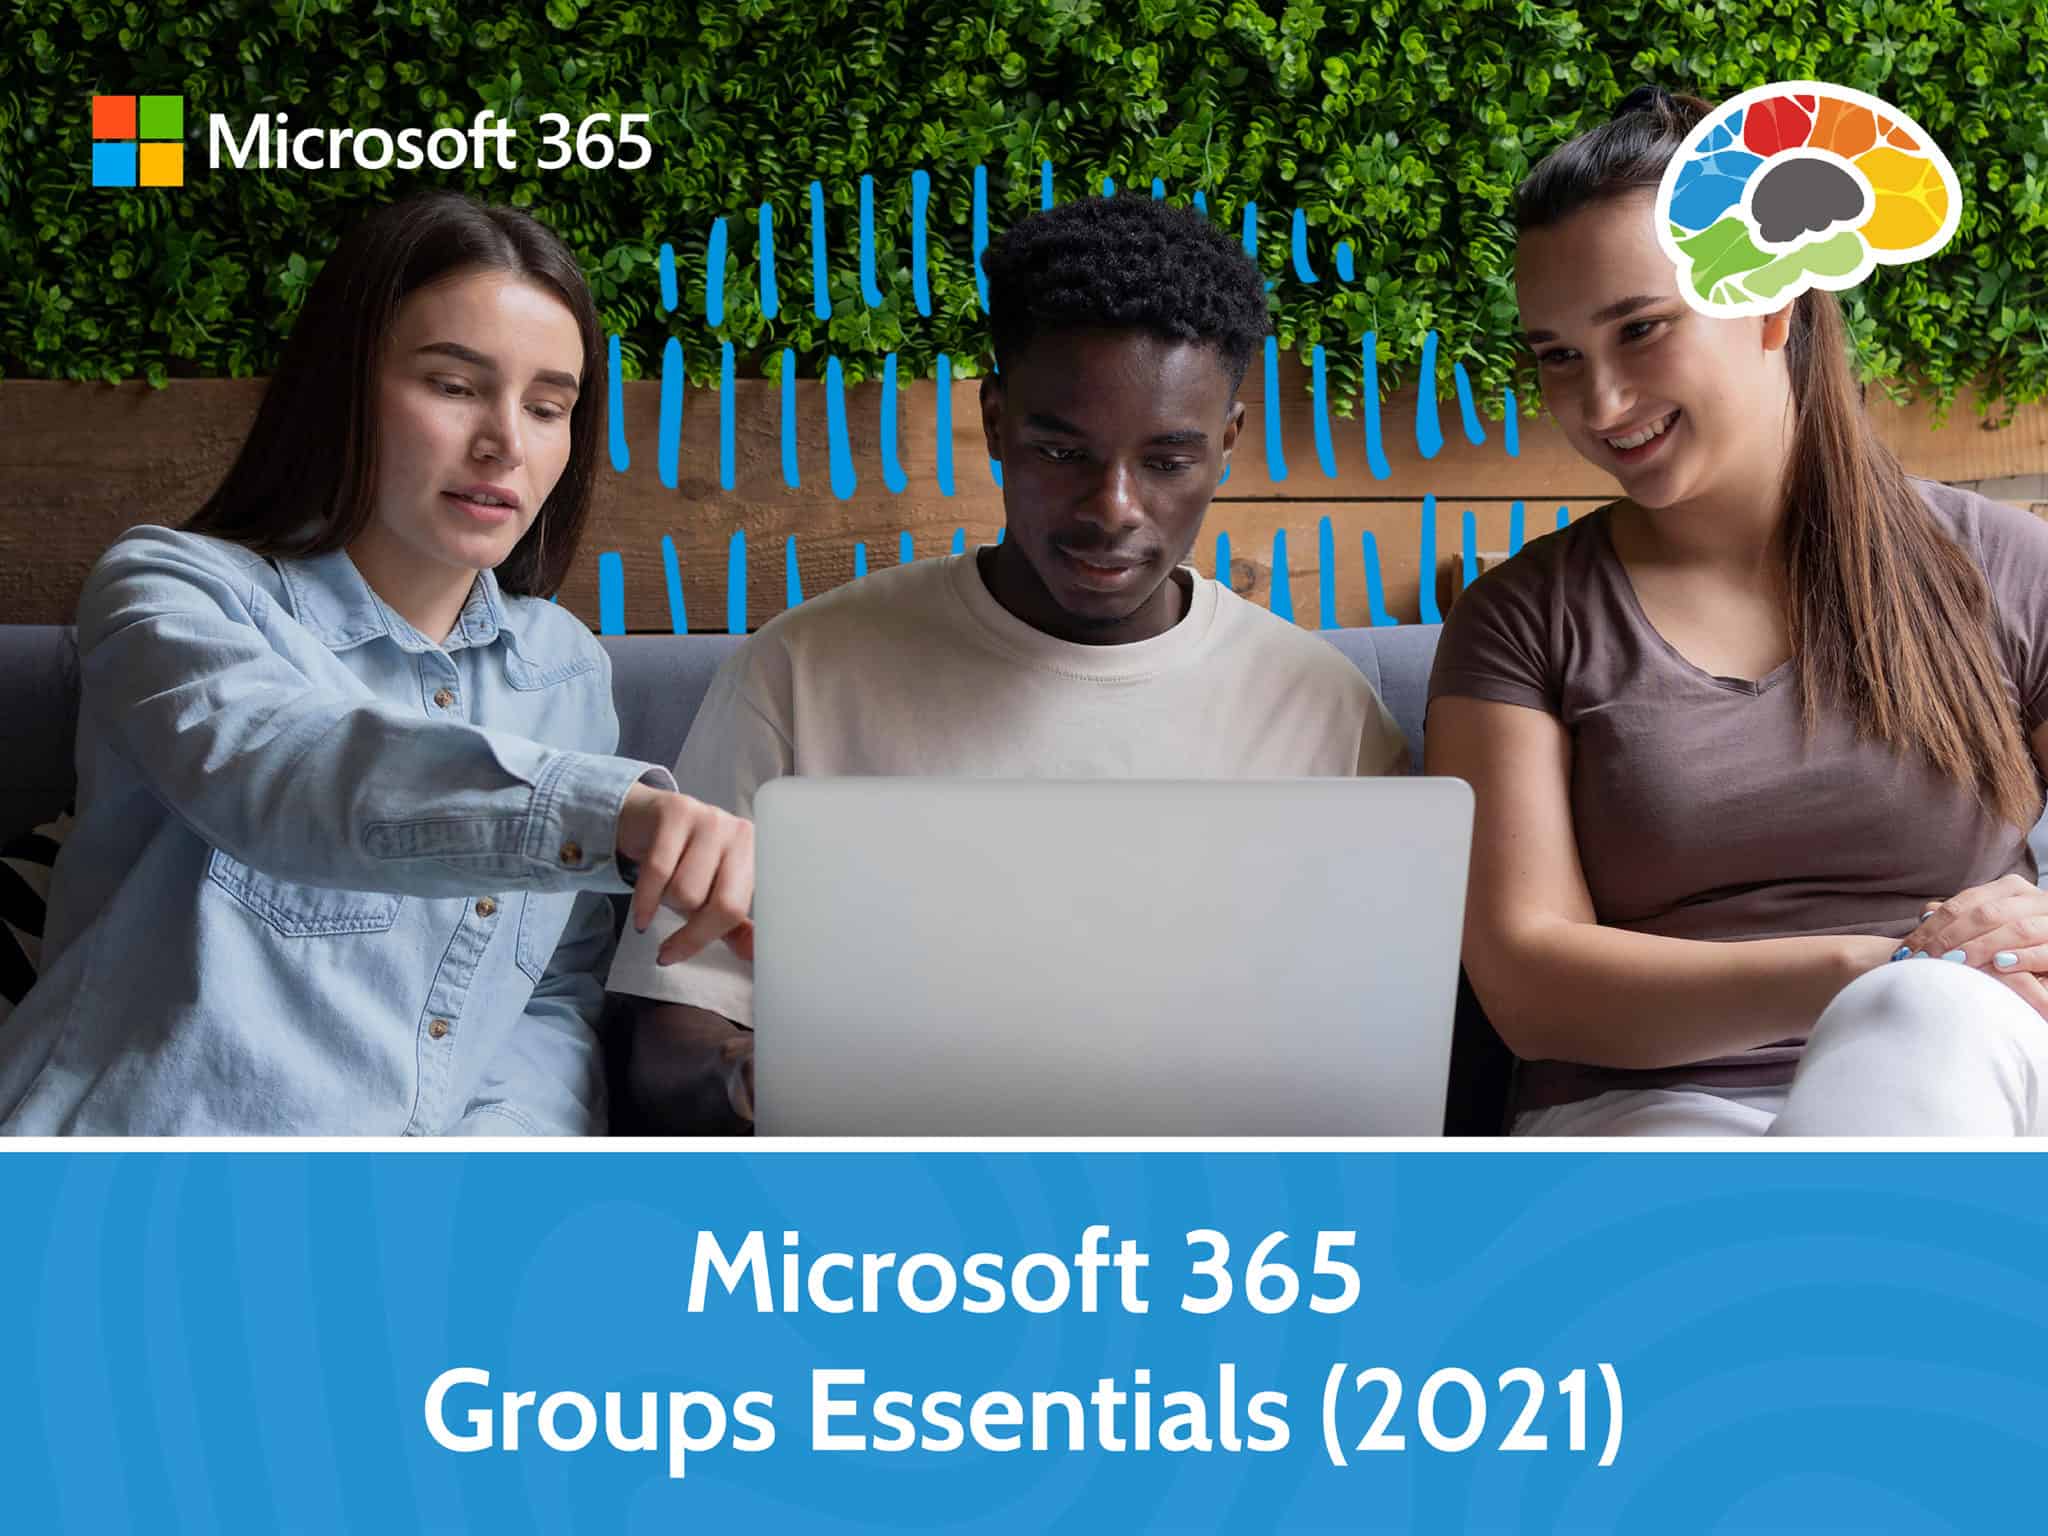 Microsoft 365 Groups Essentials 2021 scaled